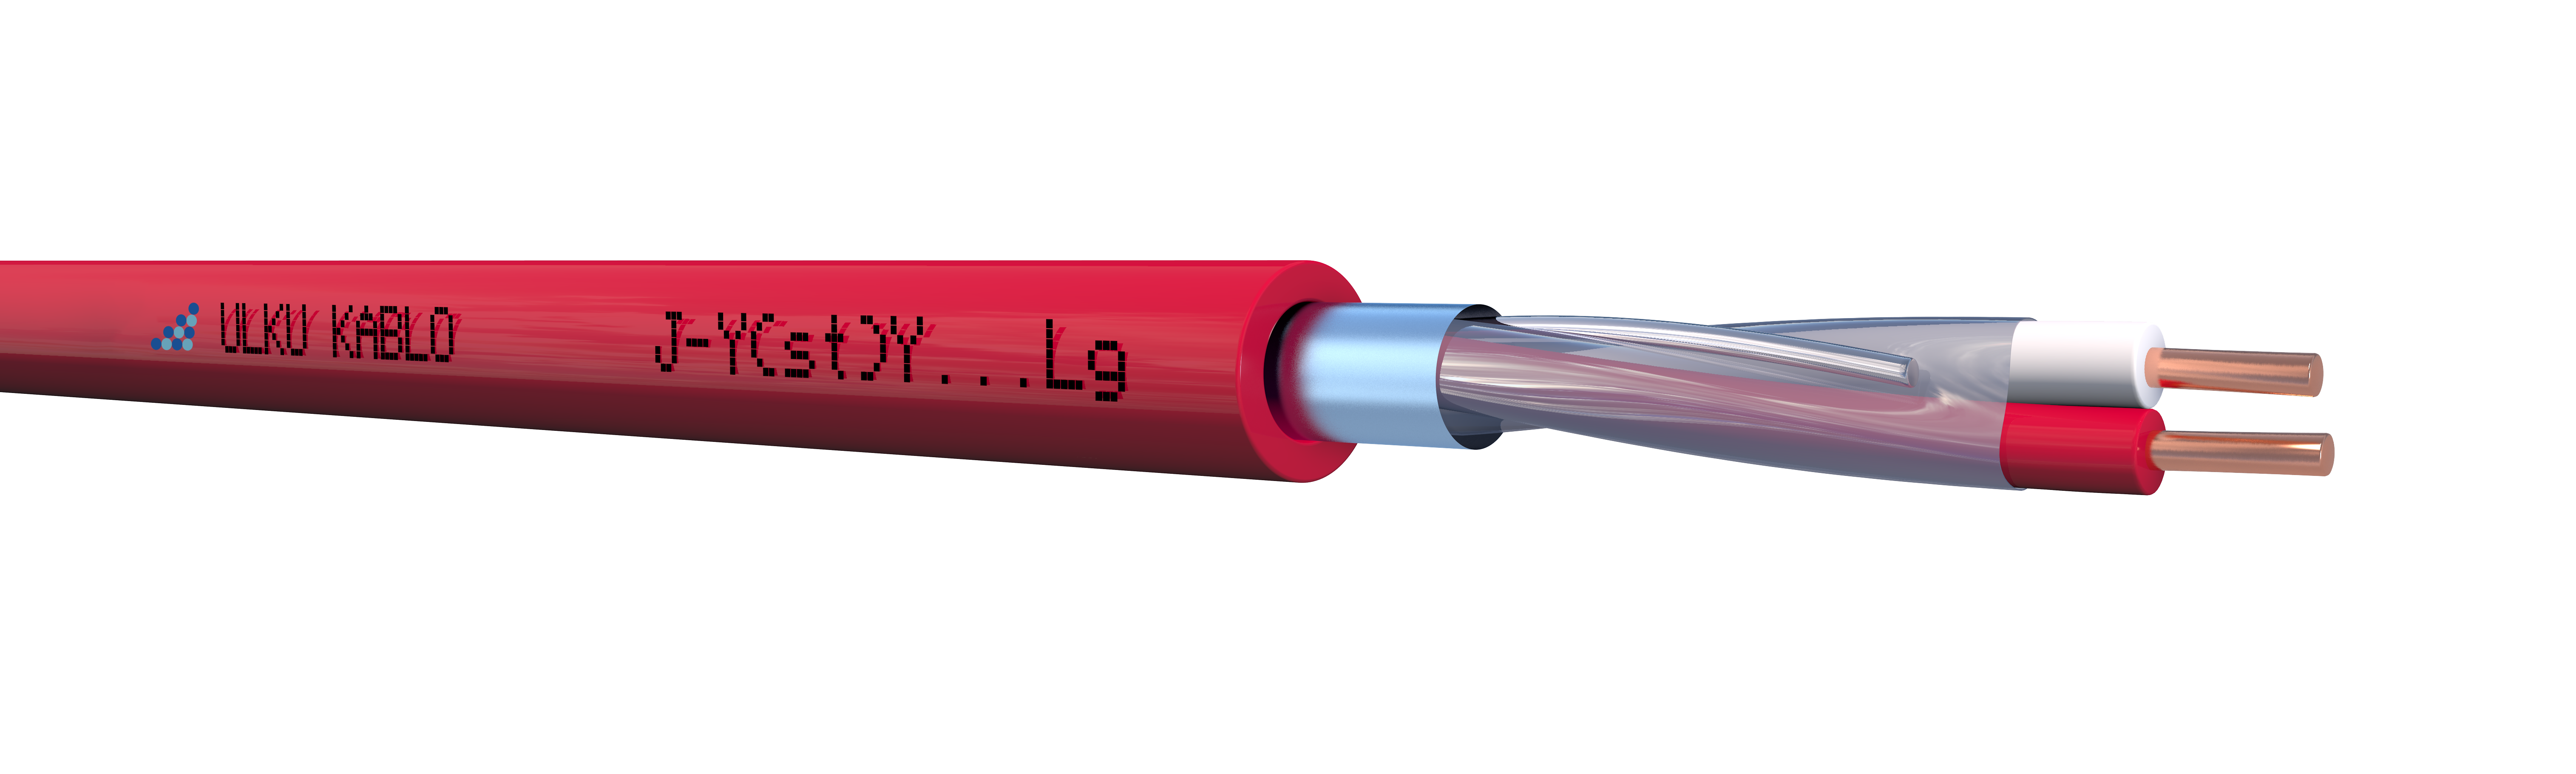 Ülkü Kablo J-Y(St)Y...Lg1x2x1,50 mm²+0,80mm   